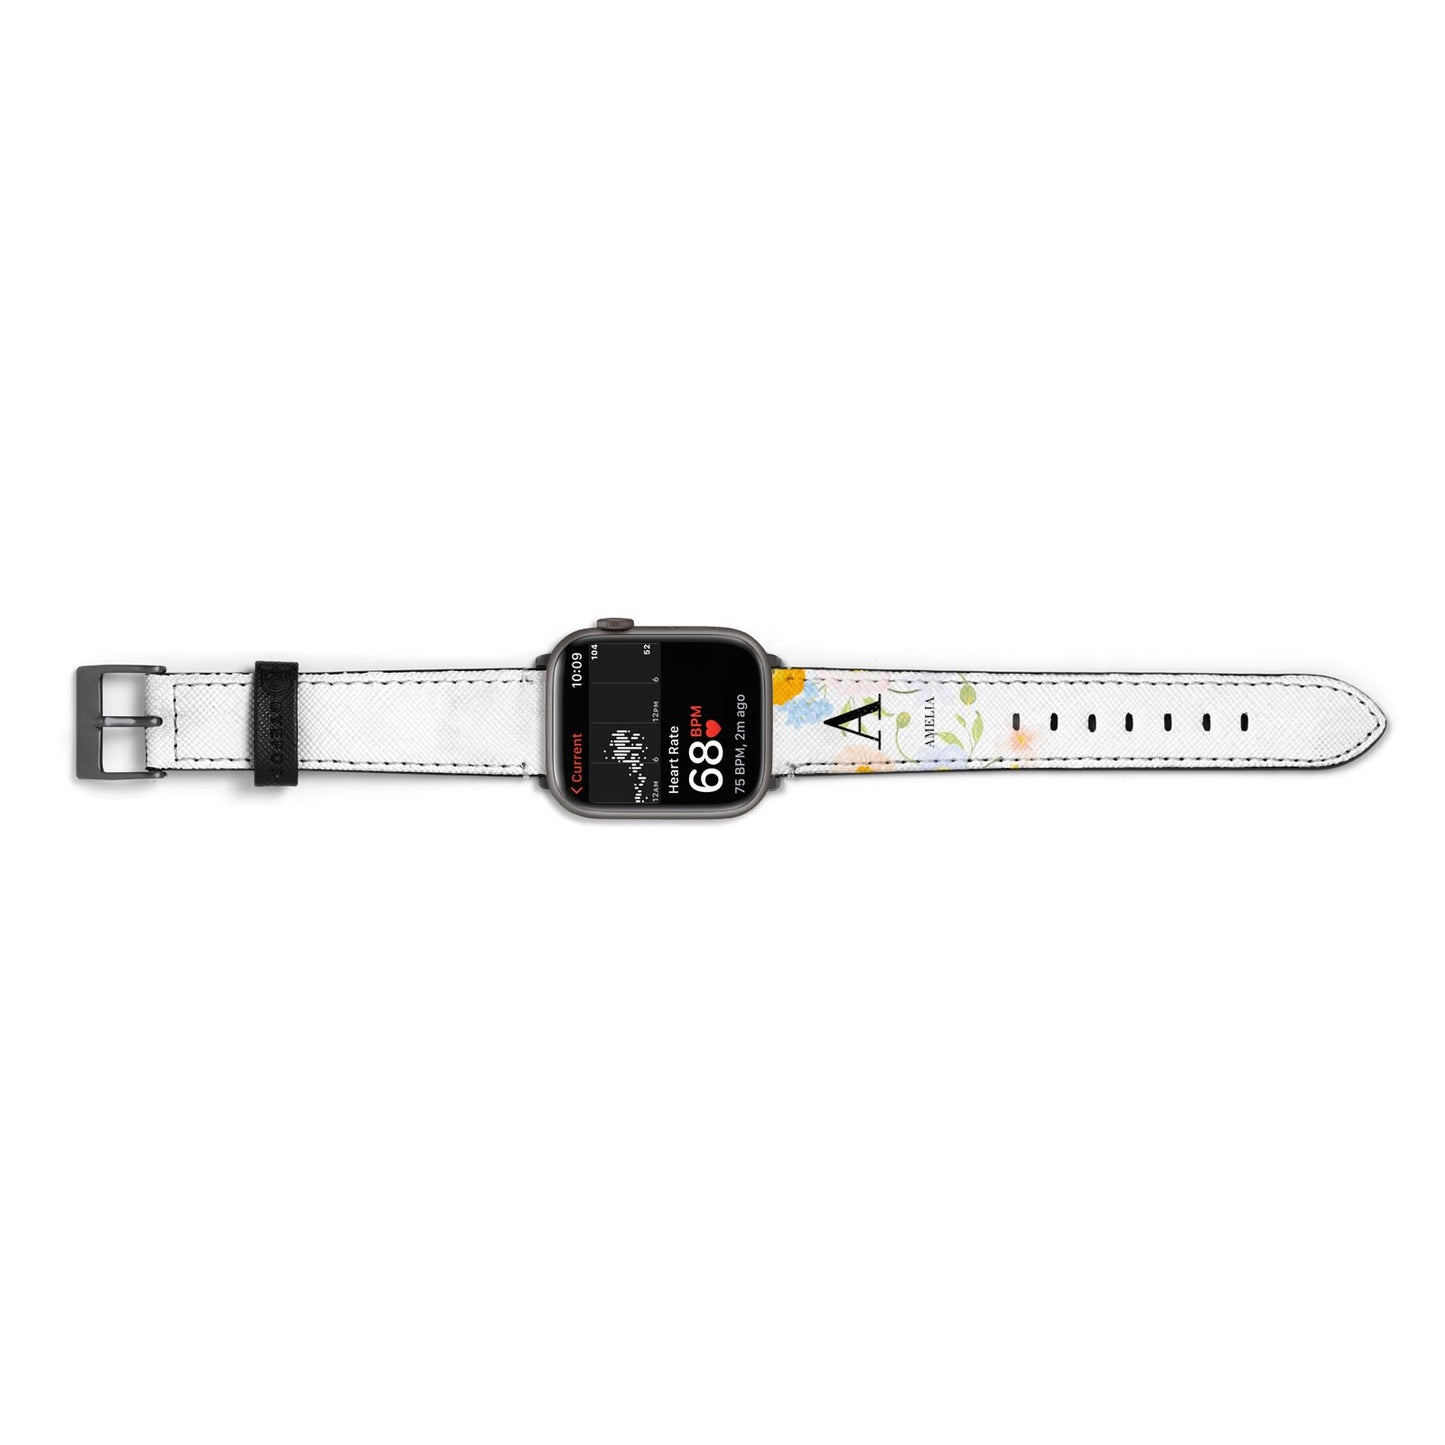 Customised Floral Apple Watch Strap Size 38mm Landscape Image Space Grey Hardware